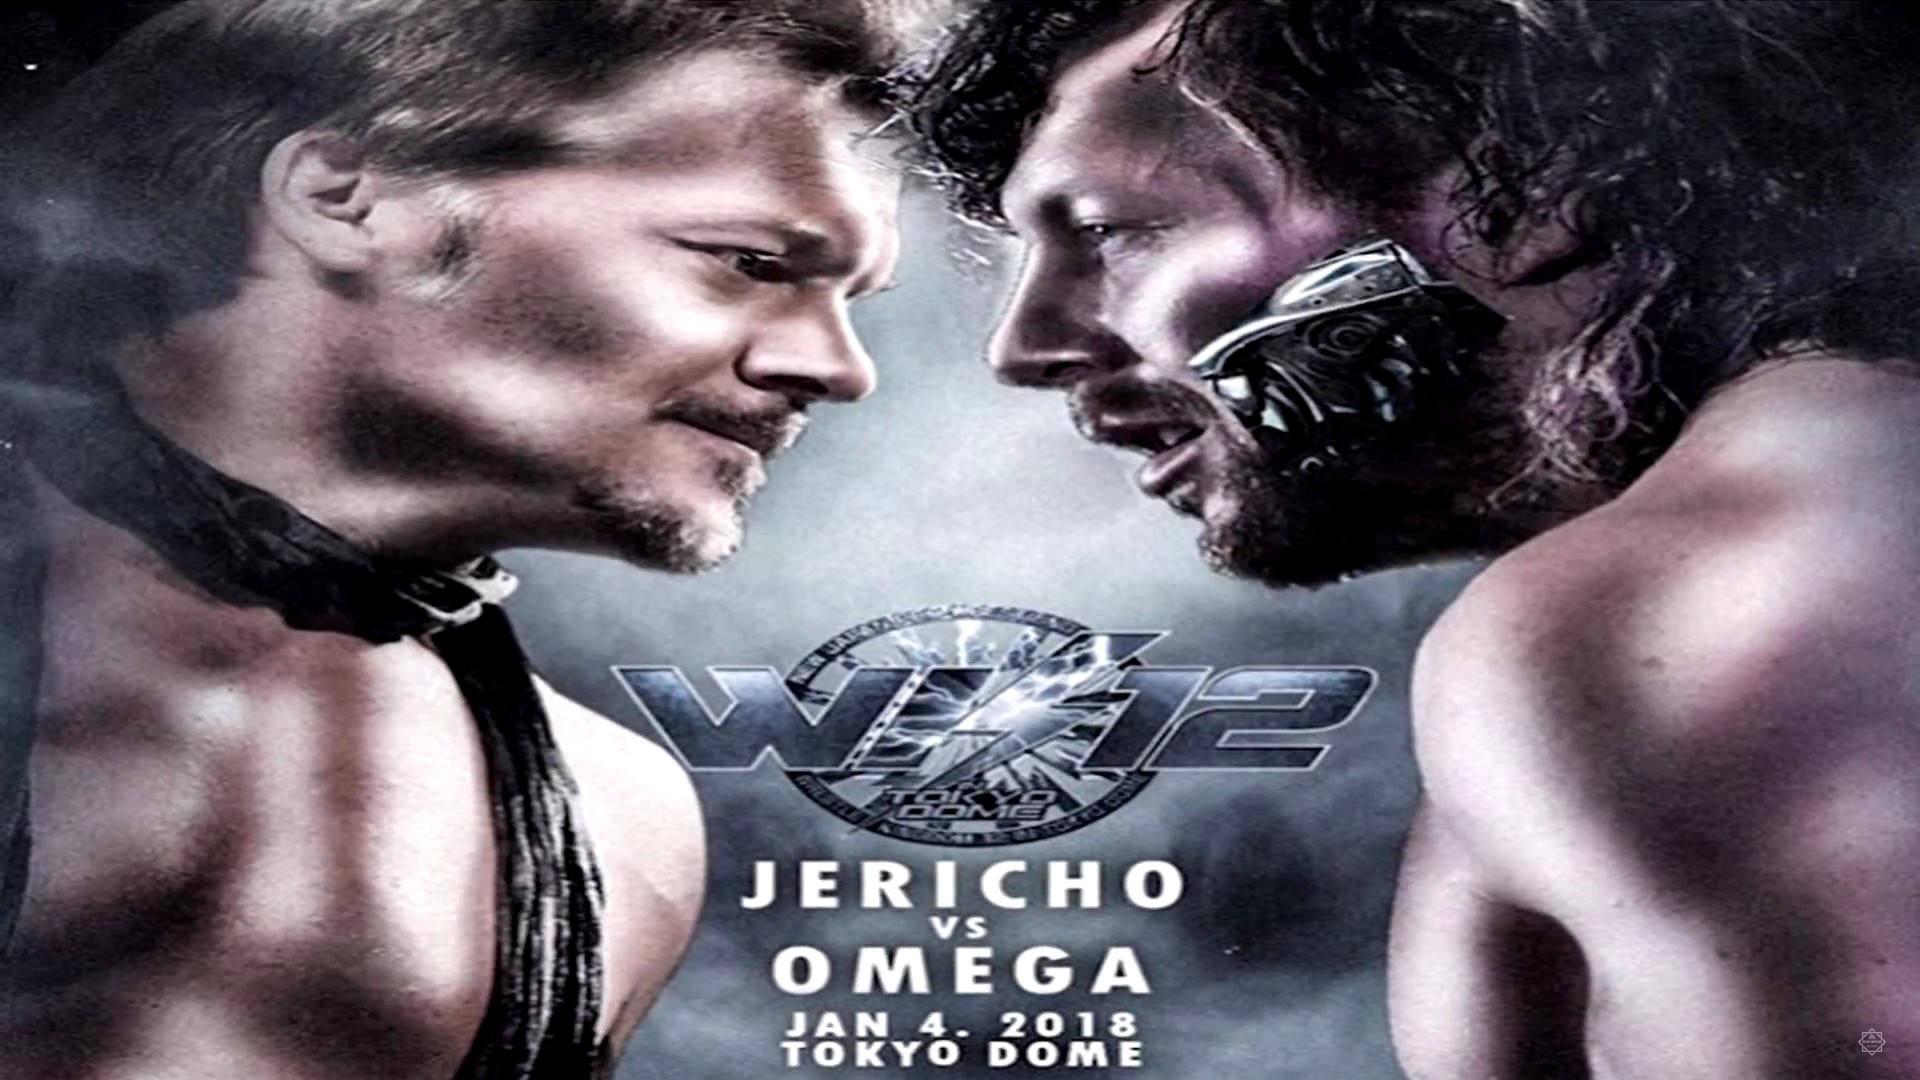 New Japan Pro Wrestling NJPW Wrestle Kingdom 12 kenny omega vs chris jericho alpha vs omega